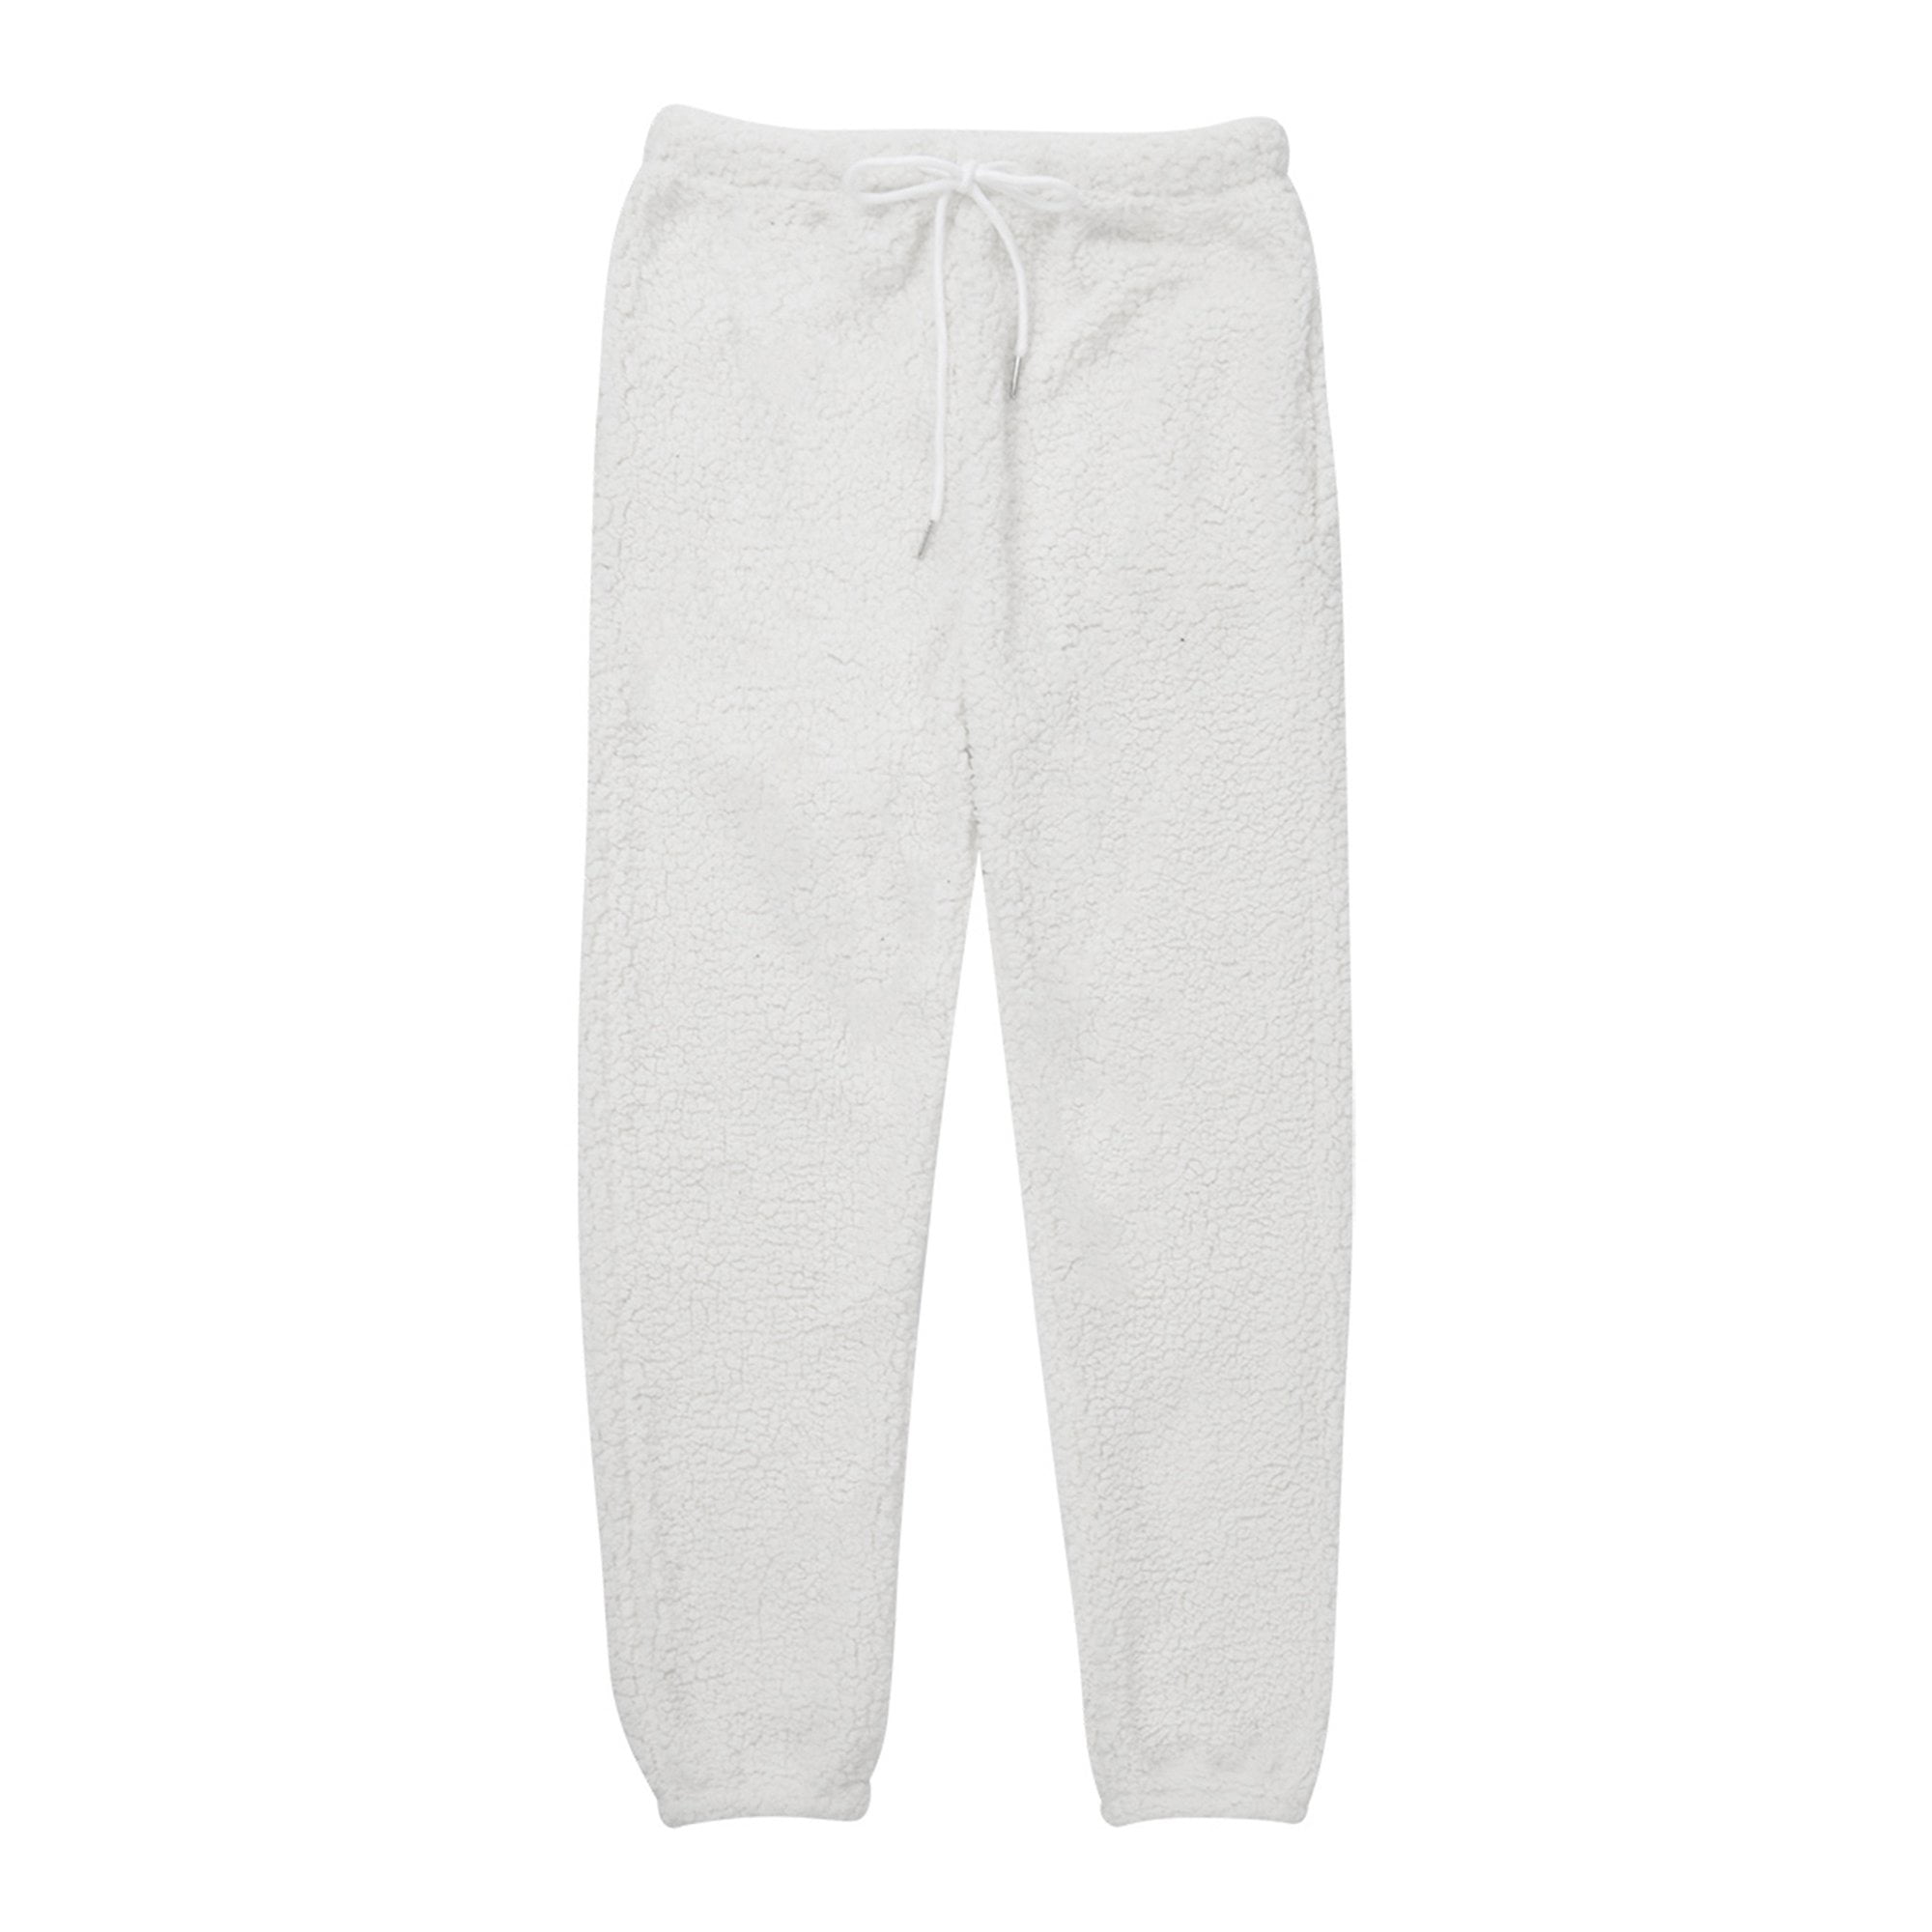 Bmnmsl Women Pajama Pants Warm Fleece Lounge Pants Sleepwear Bottoms ...